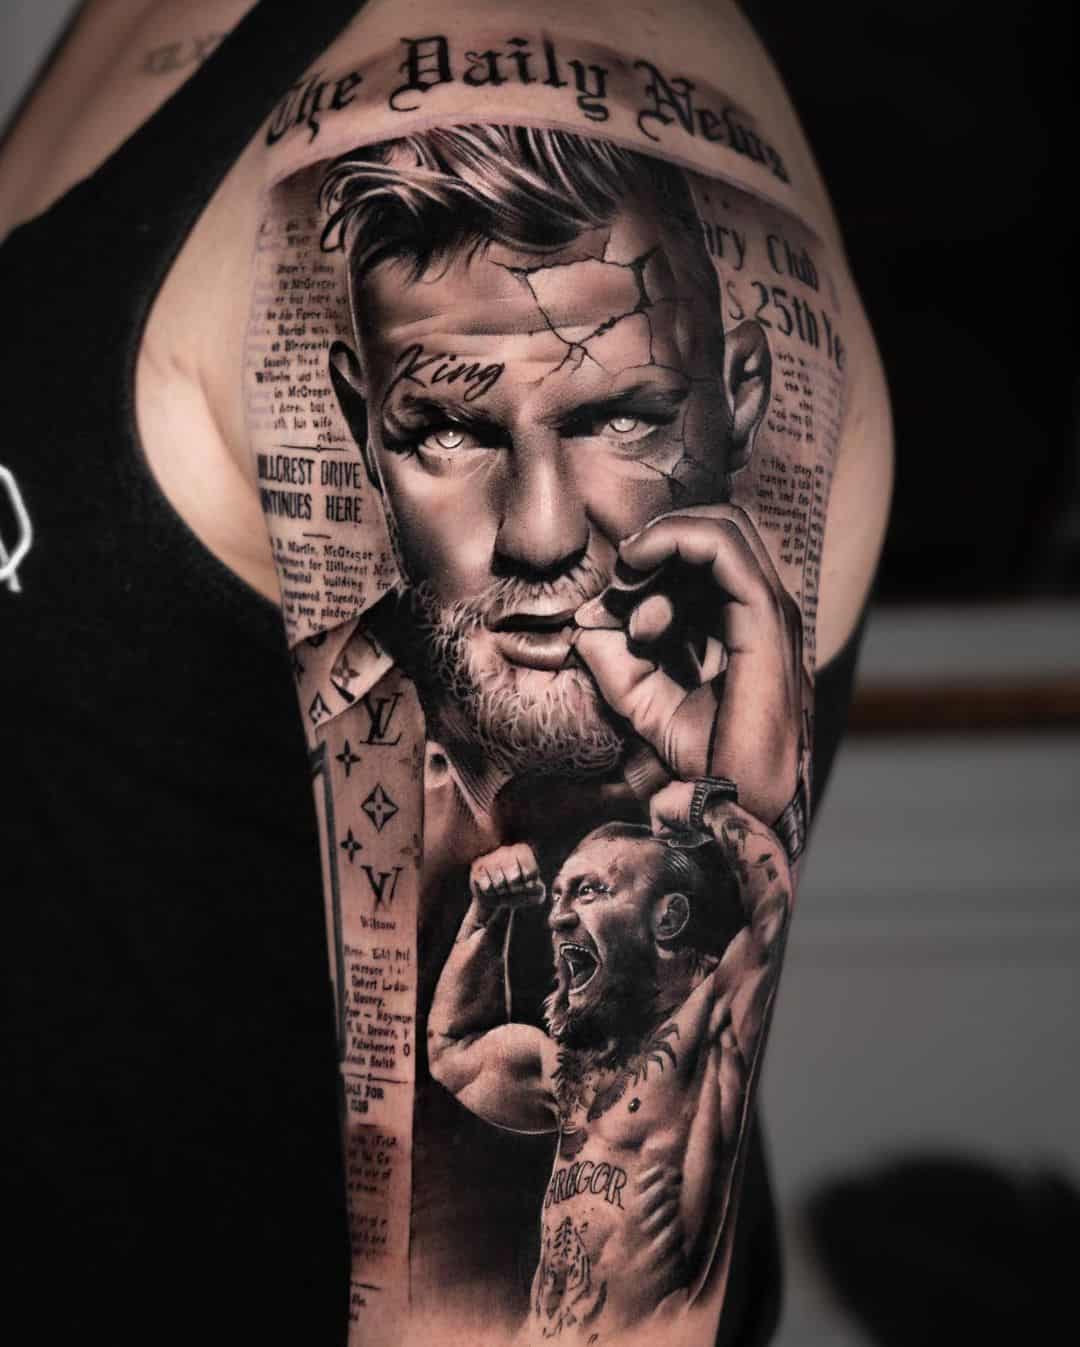 Amazing Conor portrait tattoo by johnnyc tattoo